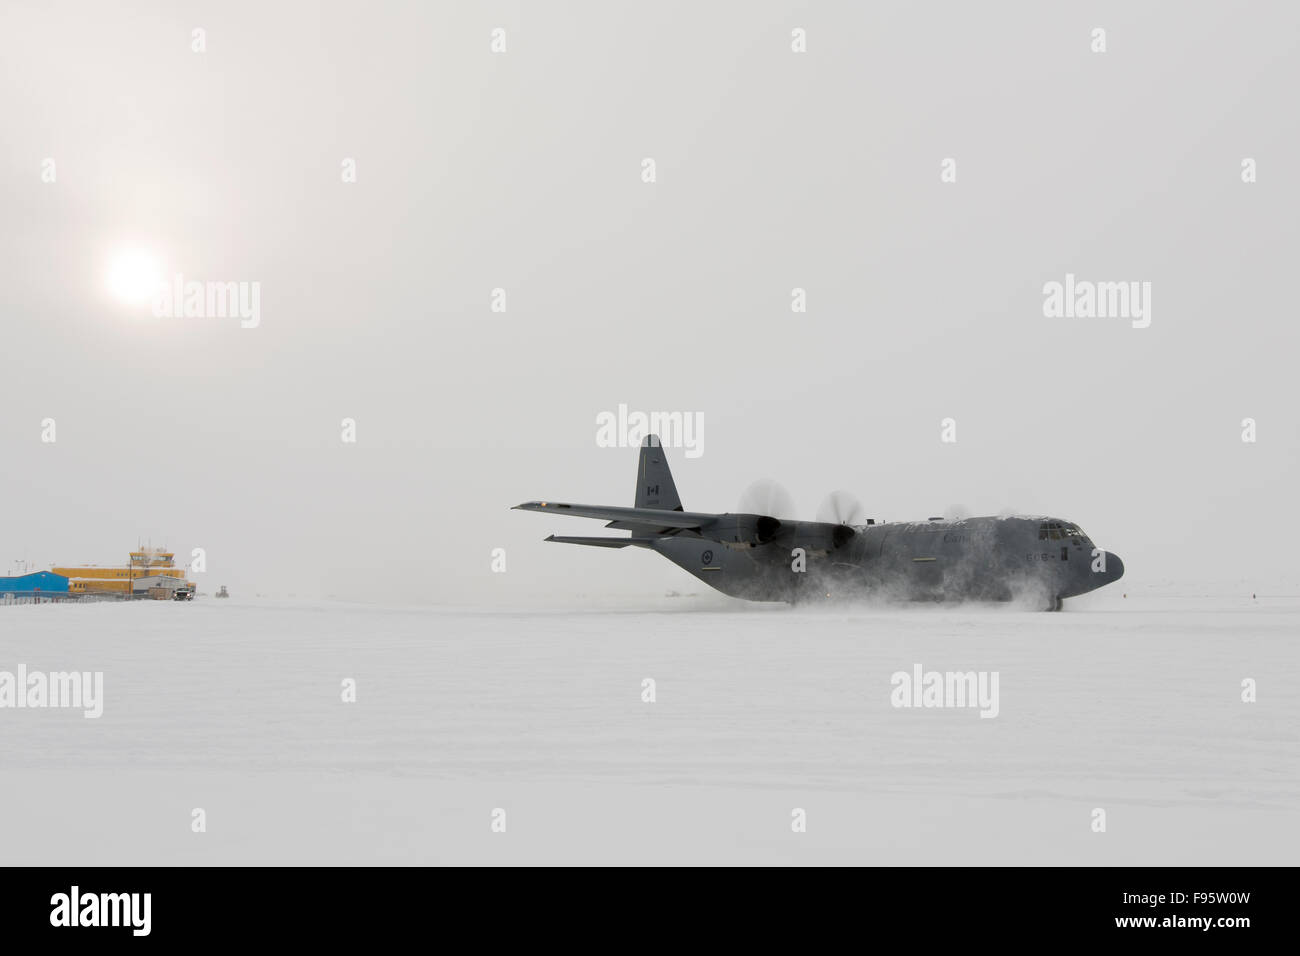 A Canadian Air Force Lockheed Hercules aircraft in Iqaluit, Nunavut, Canada Stock Photo